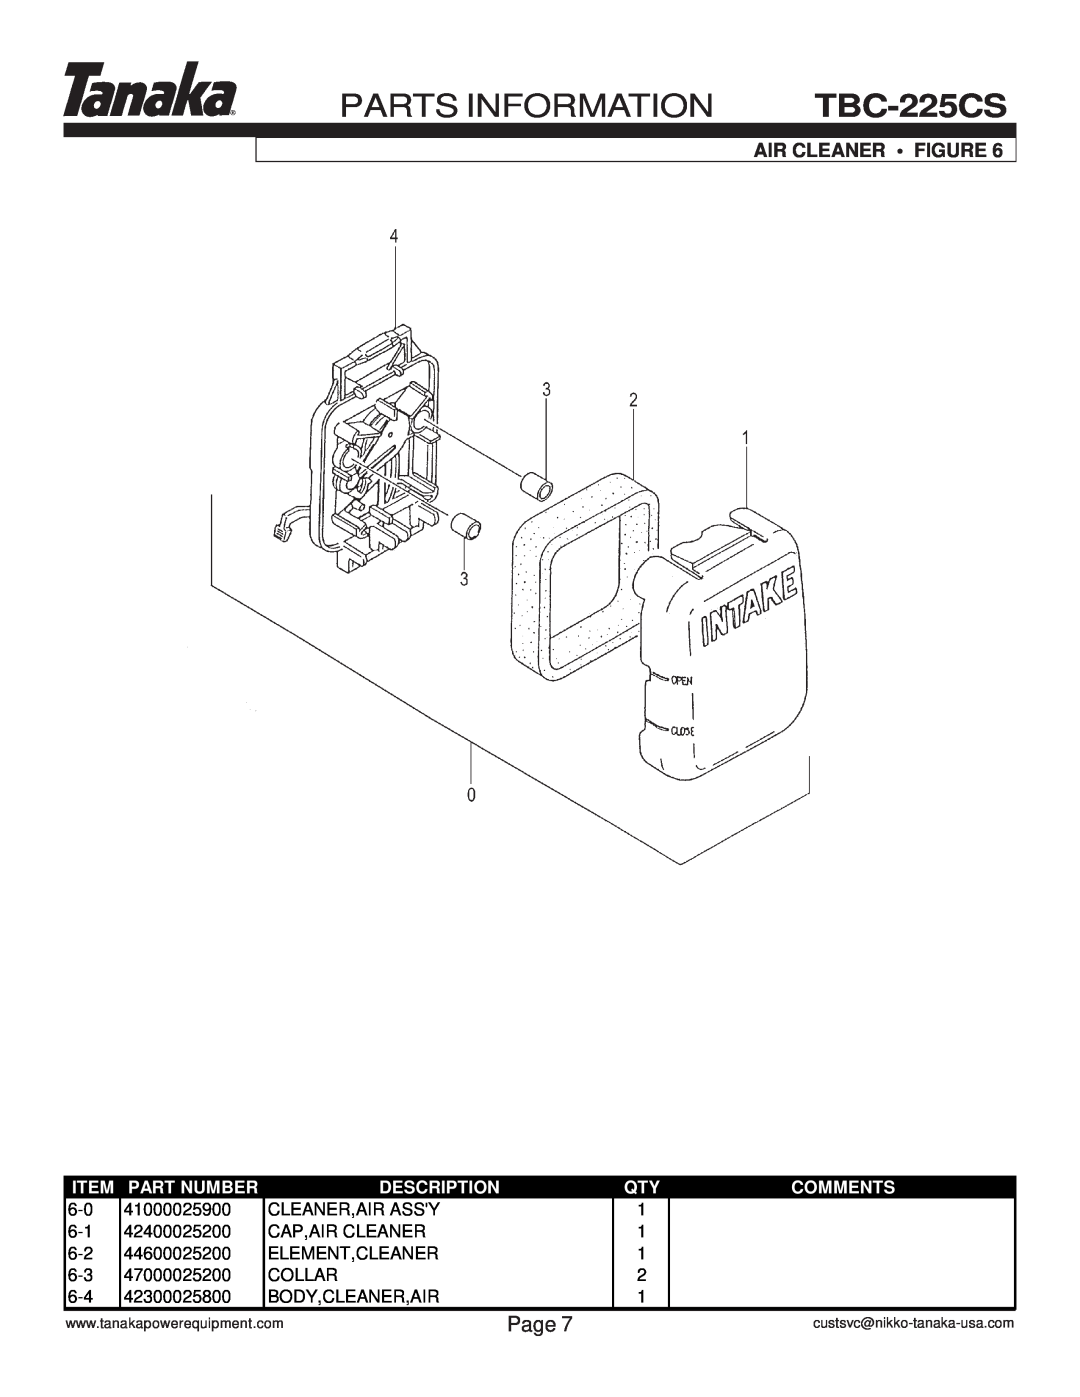 Tanaka TBC-225CS manual Air Cleaner Figure, Parts Information, Page, Part Number, Description, Comments 